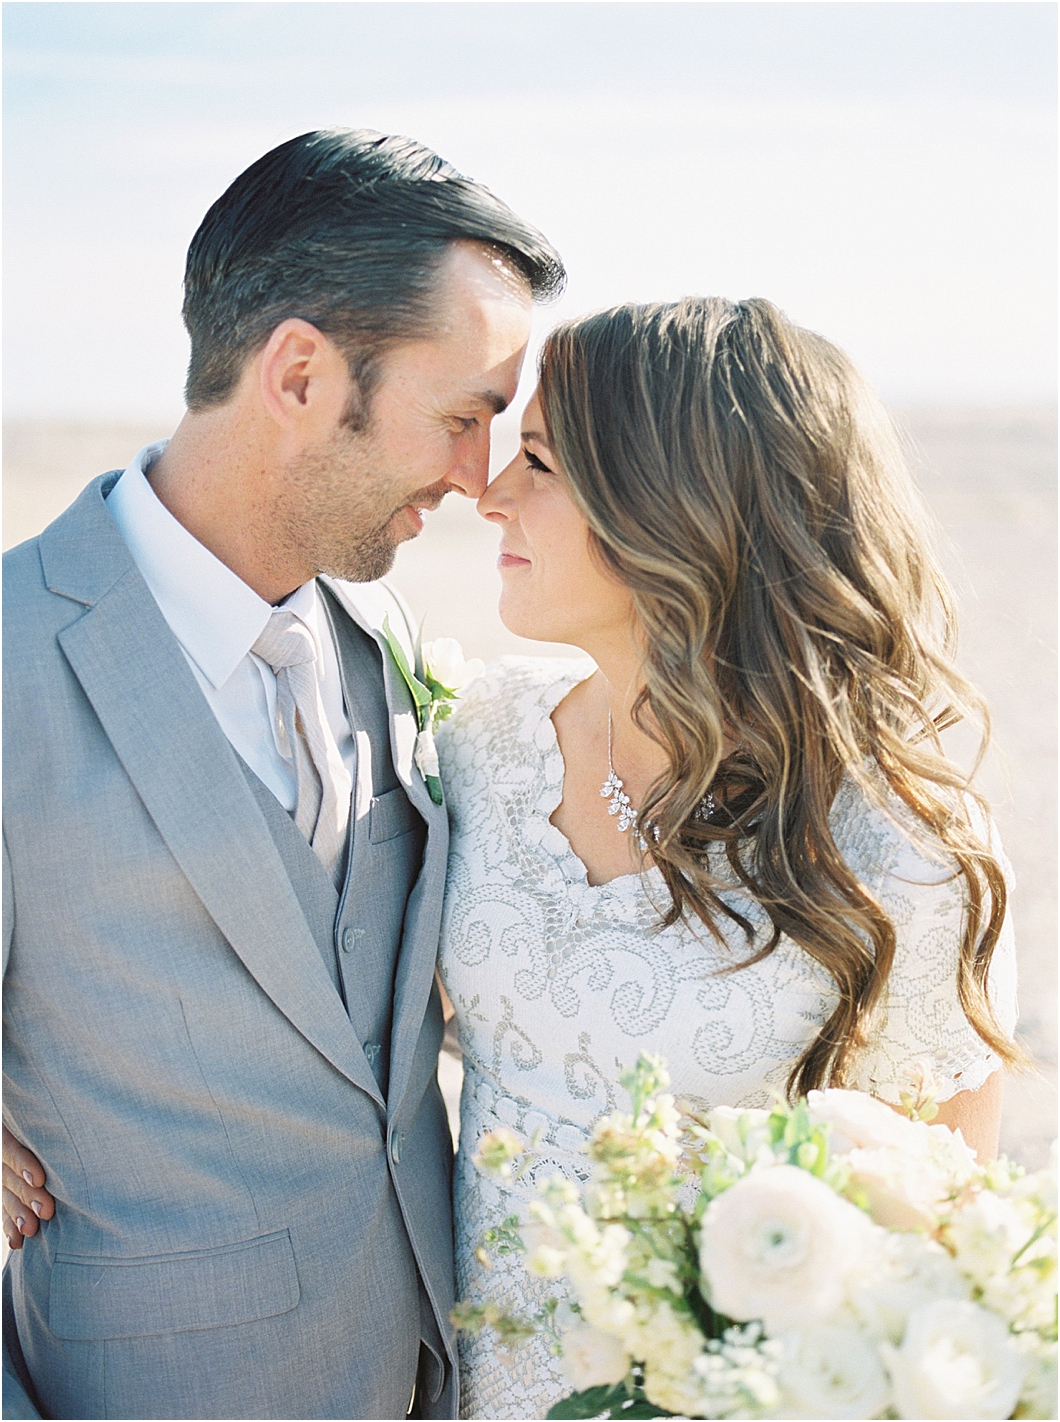 Las Vegas Elopement Wedding by Hillary Muelleck Photography